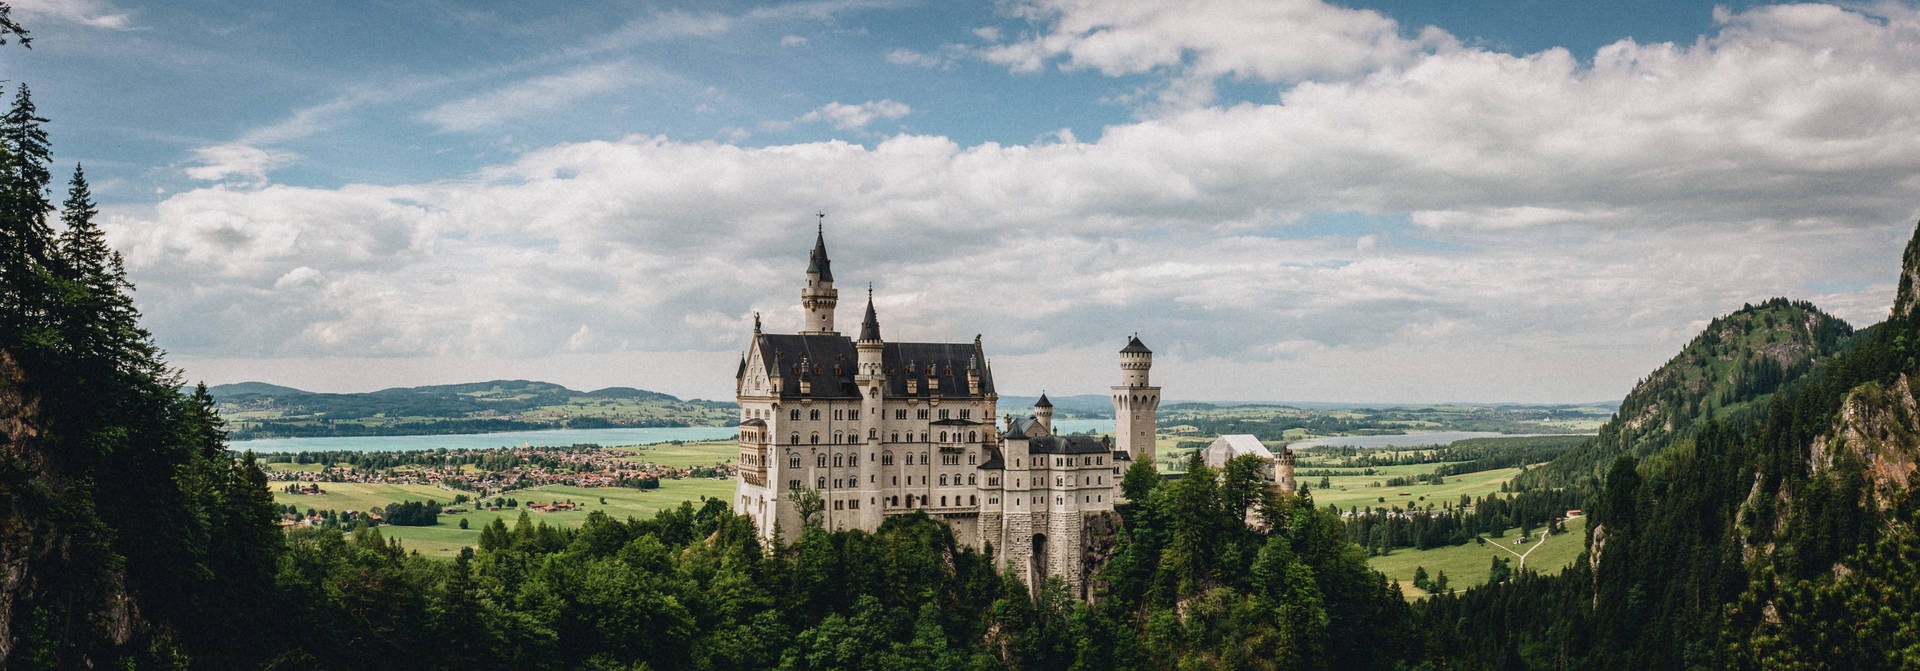 Castle Neuschwanstein Germany Widescreen Background